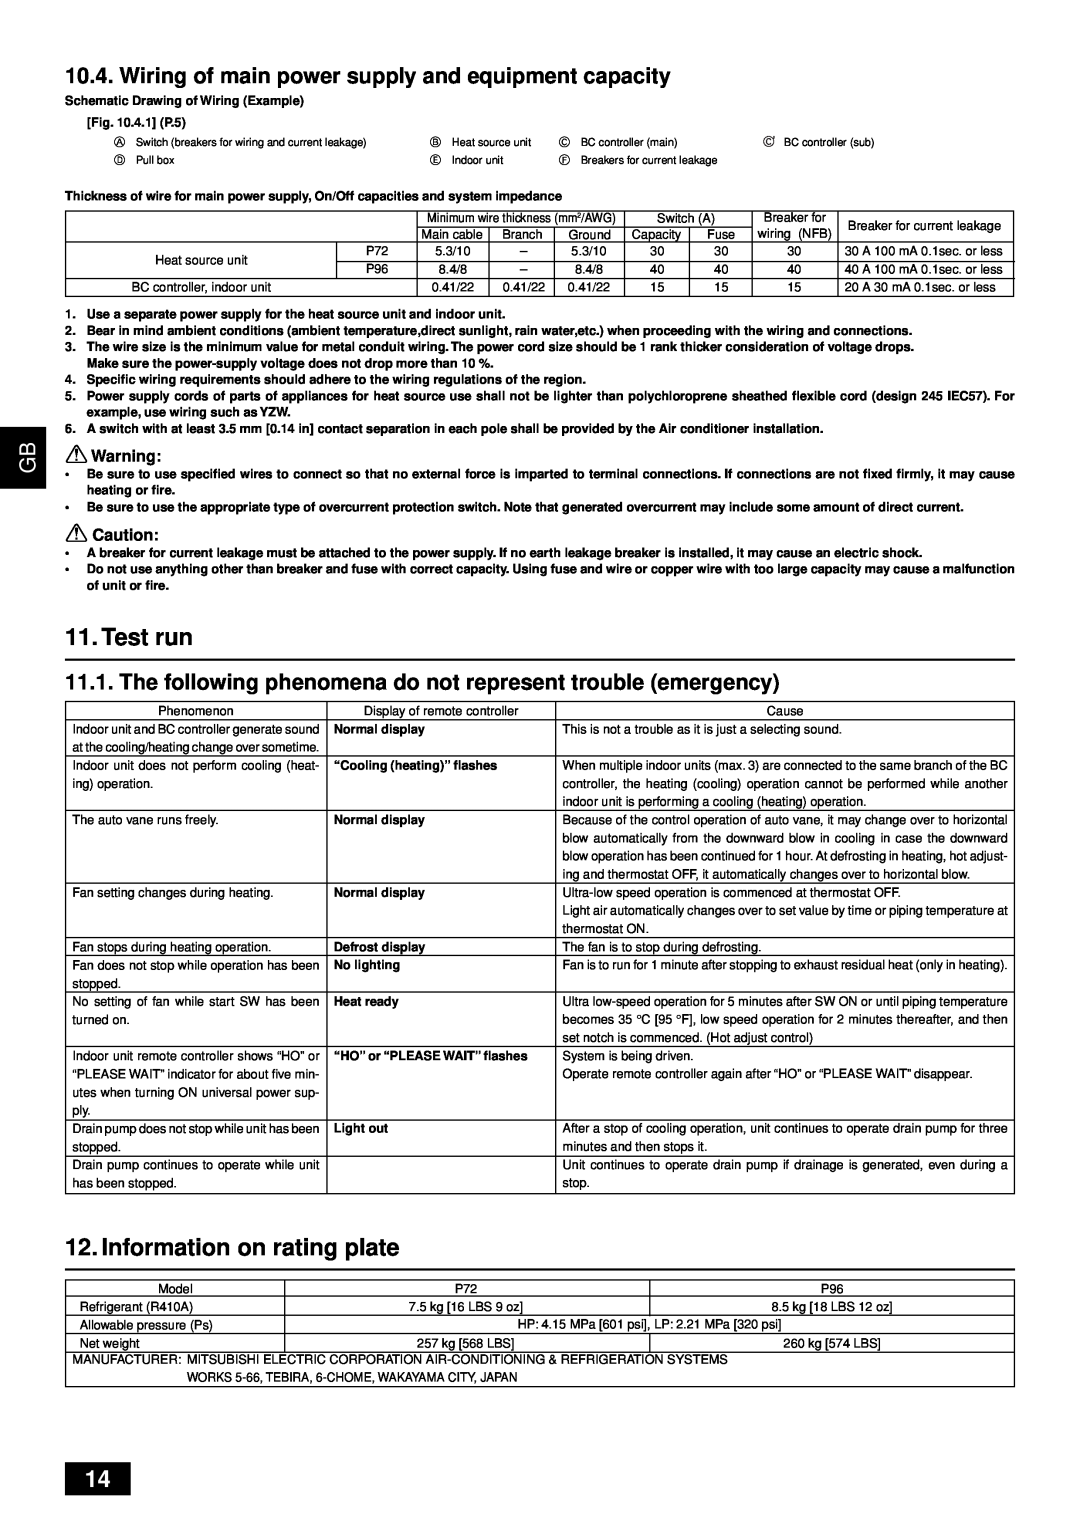 Bell Sports PQRY-P72-96TGMU-A installation manual Test run, Information on rating plate 